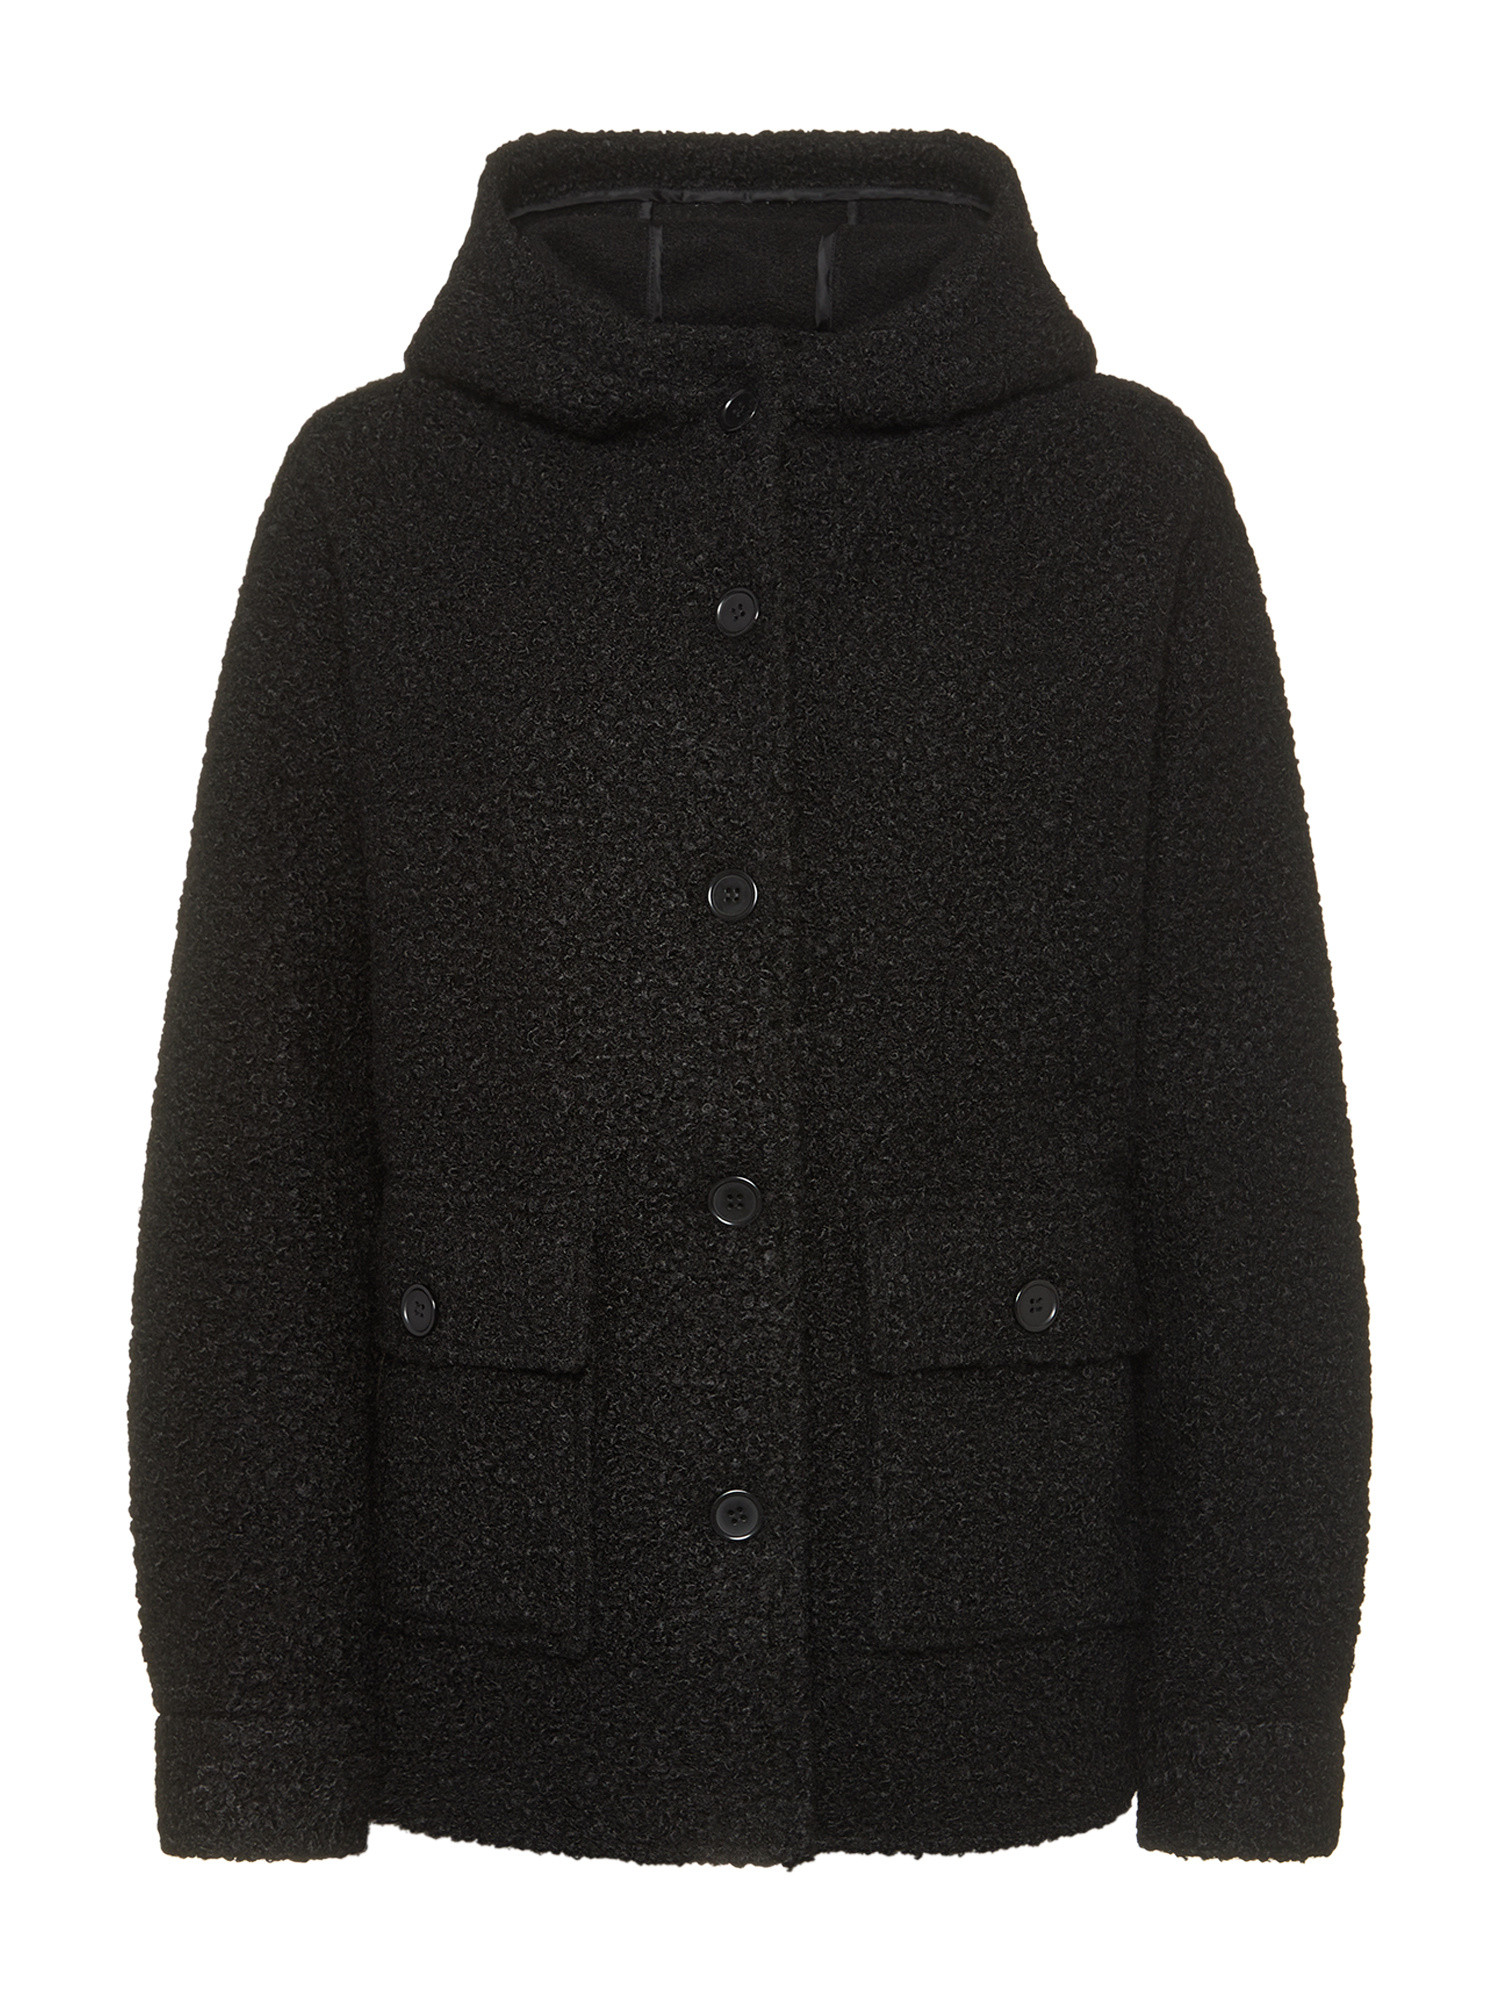 Koan - Short jacket with hood, Black, large image number 0